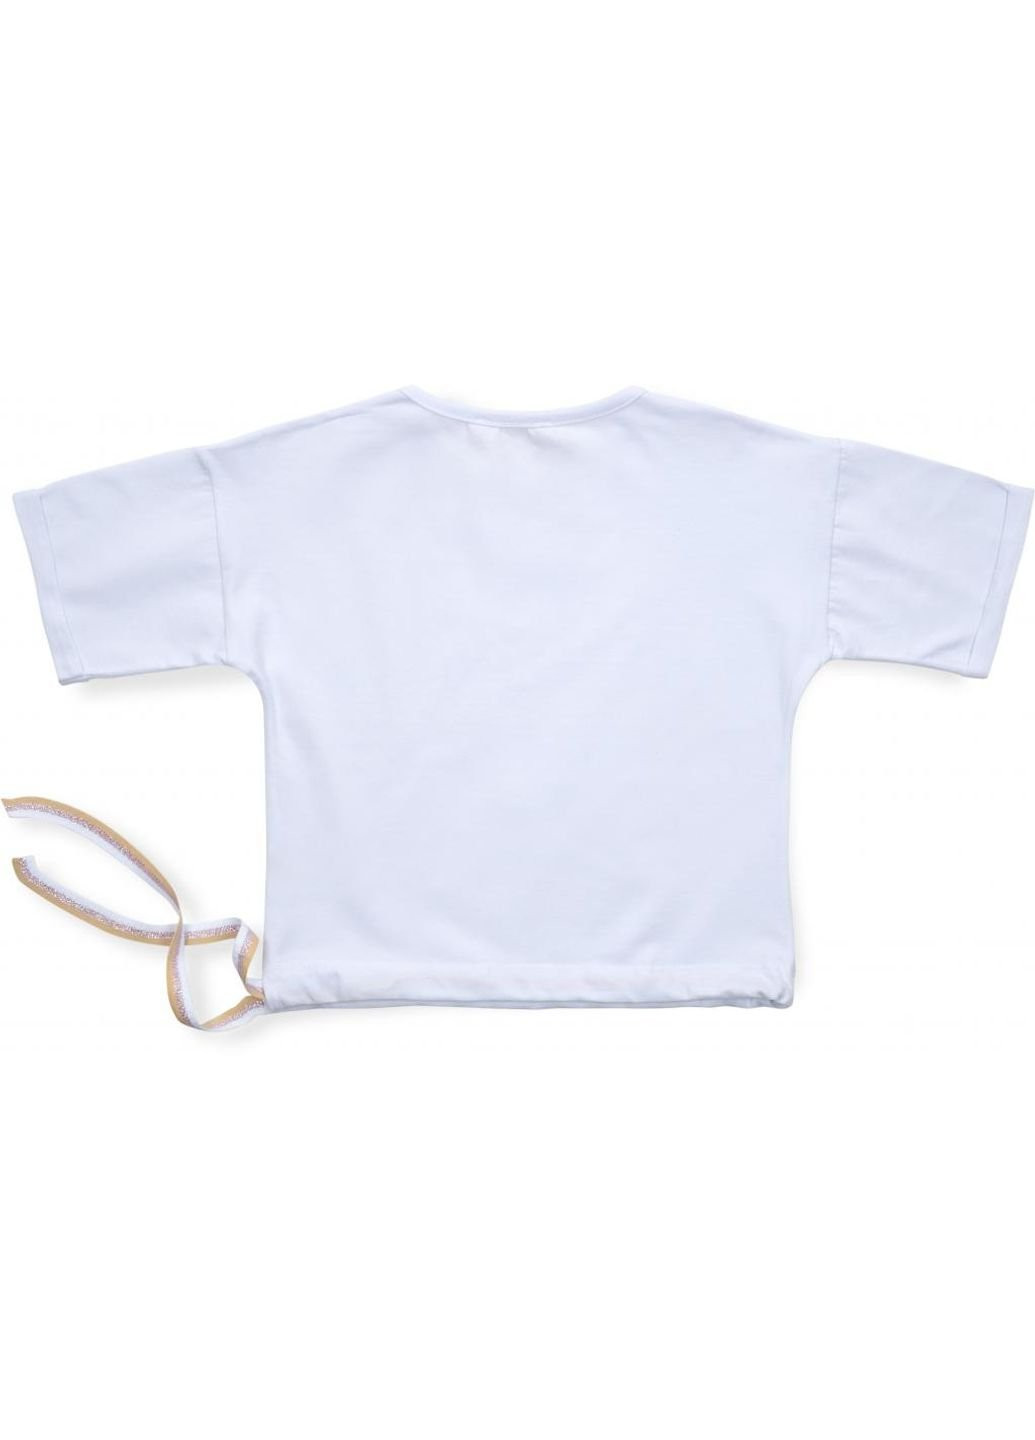 Біла літня футболка дитяча одяг з паєткою (3126-122g-white) Smile